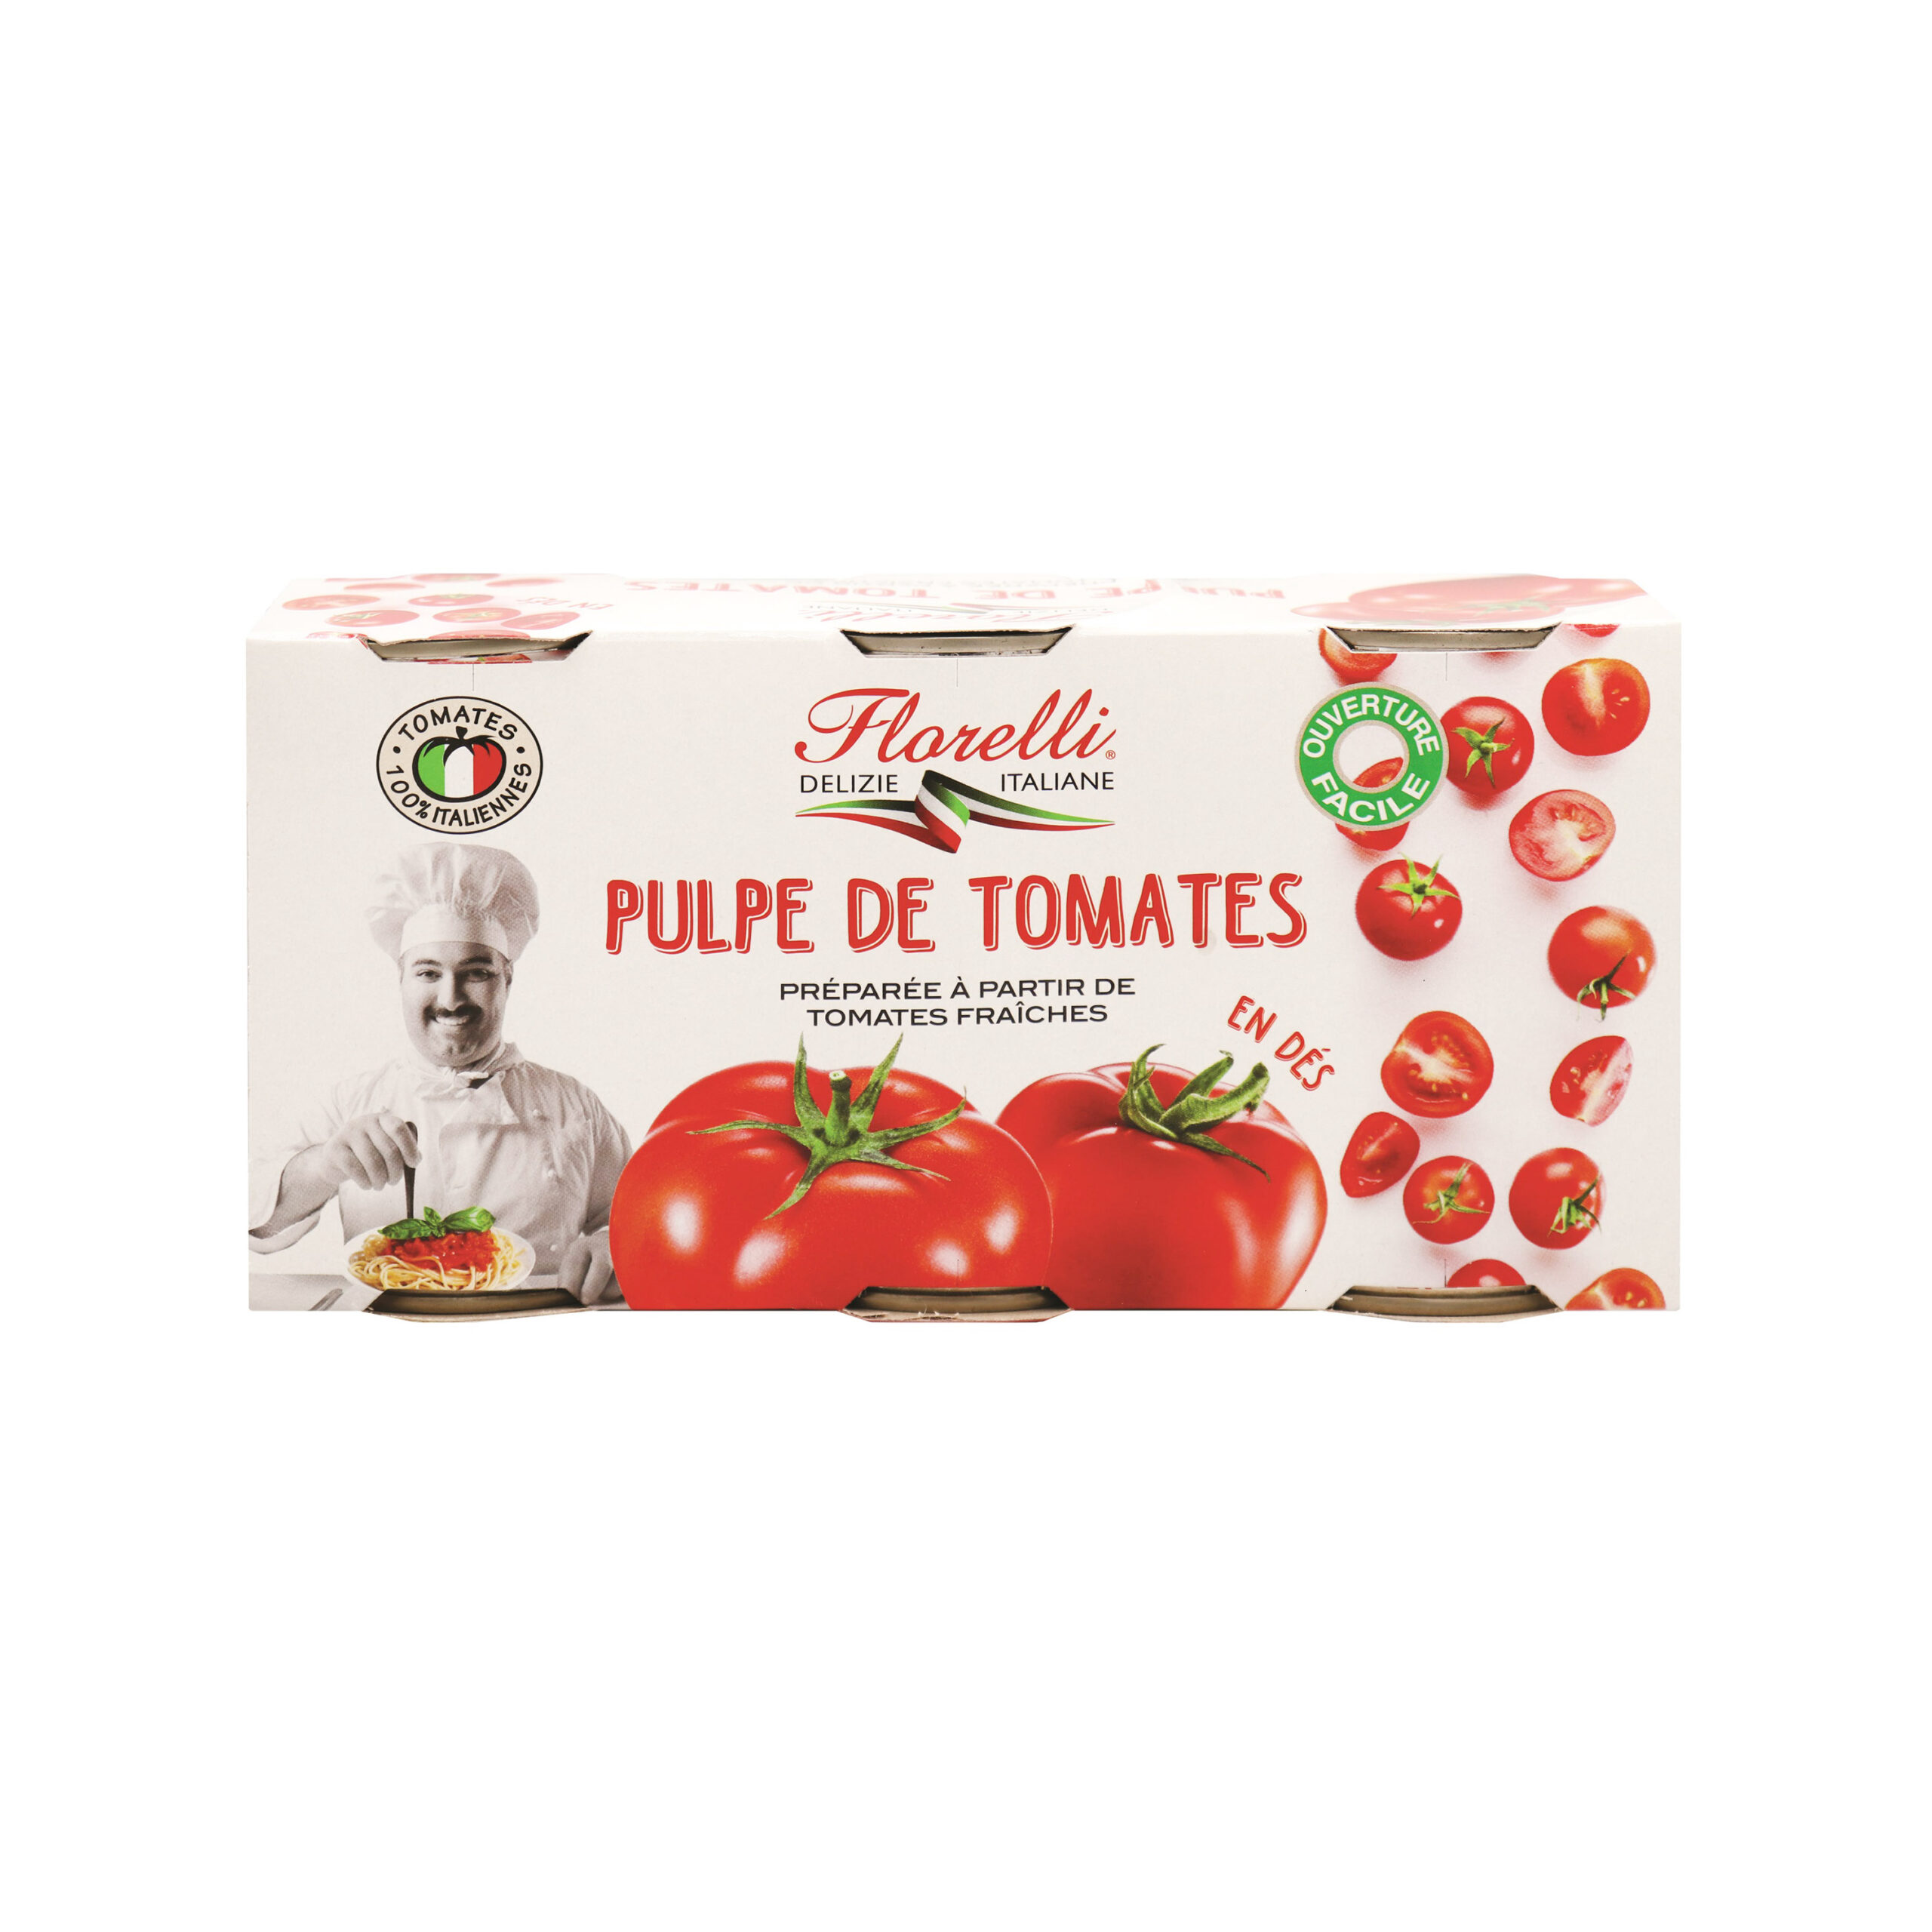 Pulpe de tomates 3x400g